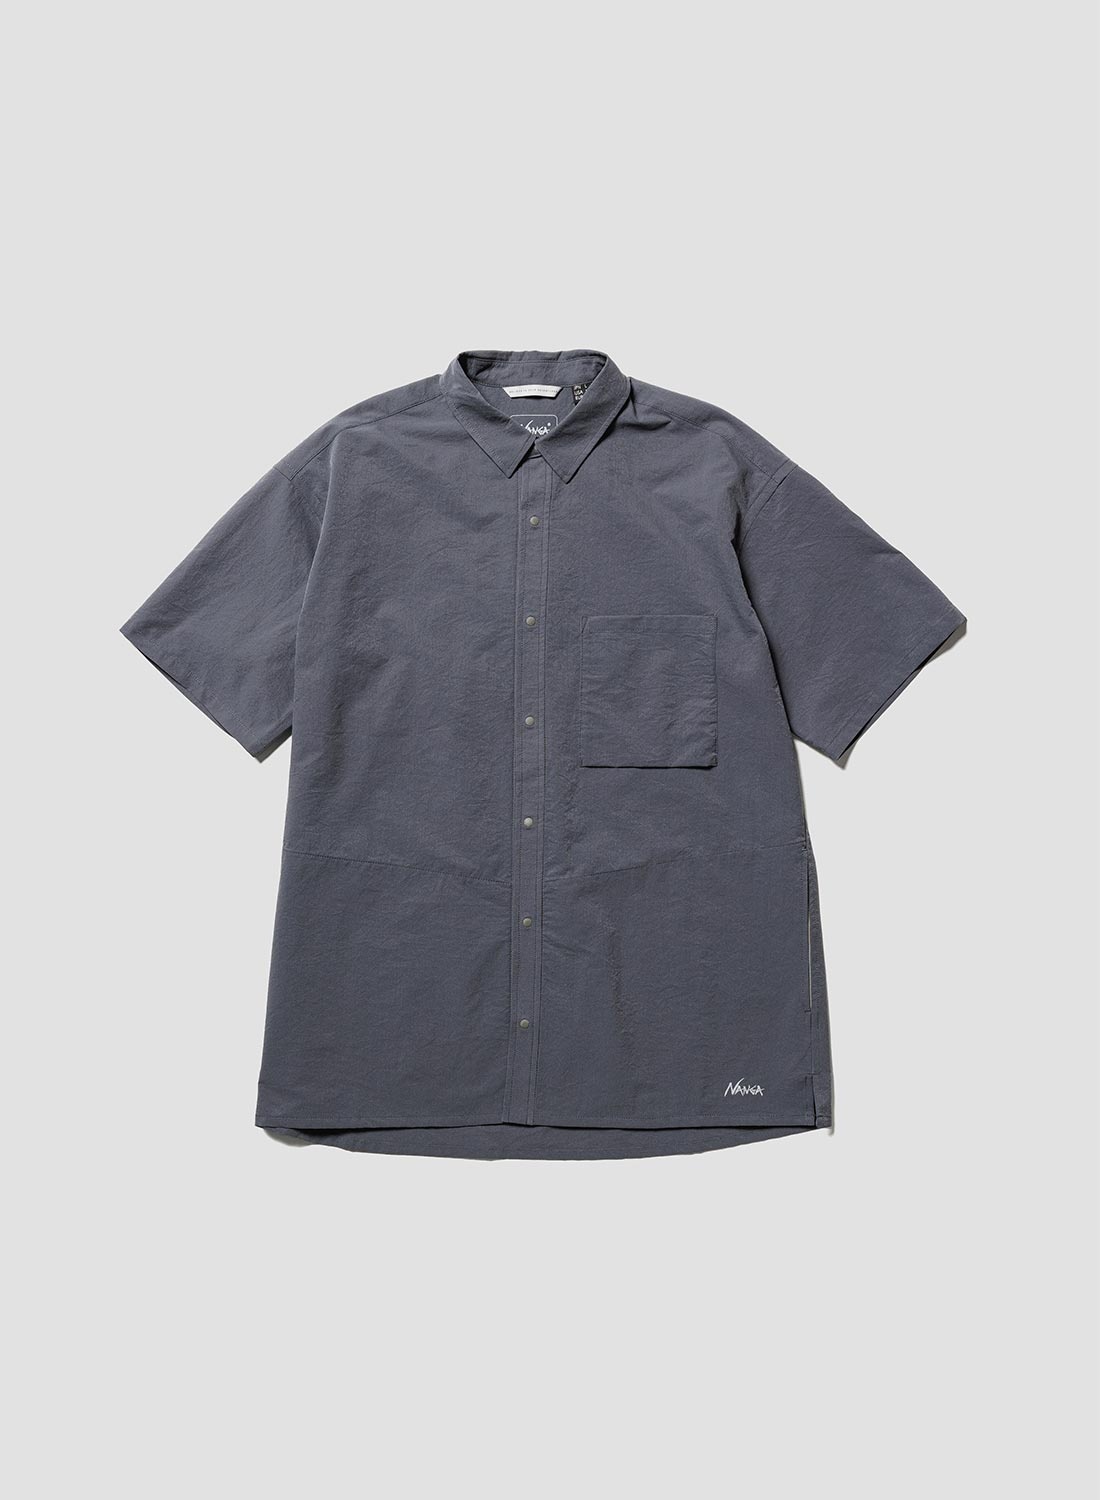 Nanga Air Cloth Comfy Short Sleeve Shirt in Grey - 1